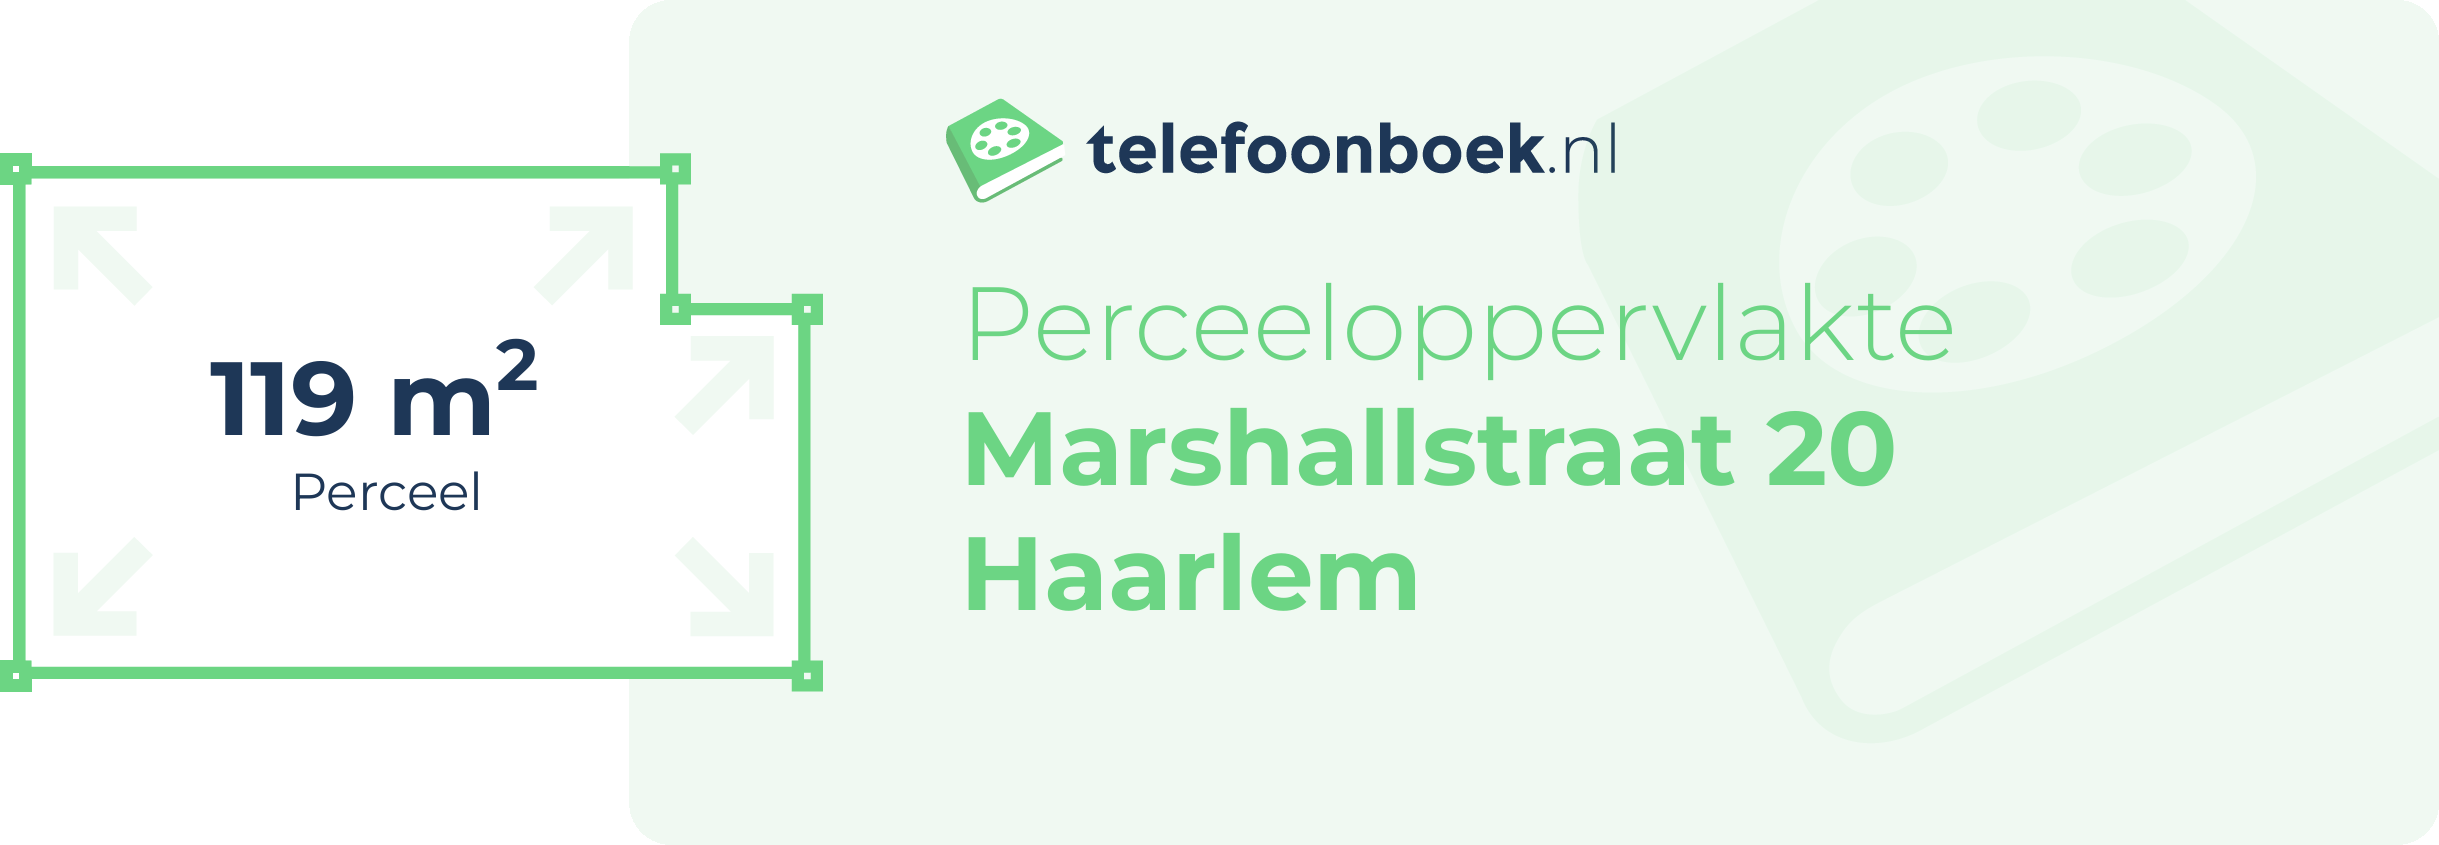 Perceeloppervlakte Marshallstraat 20 Haarlem